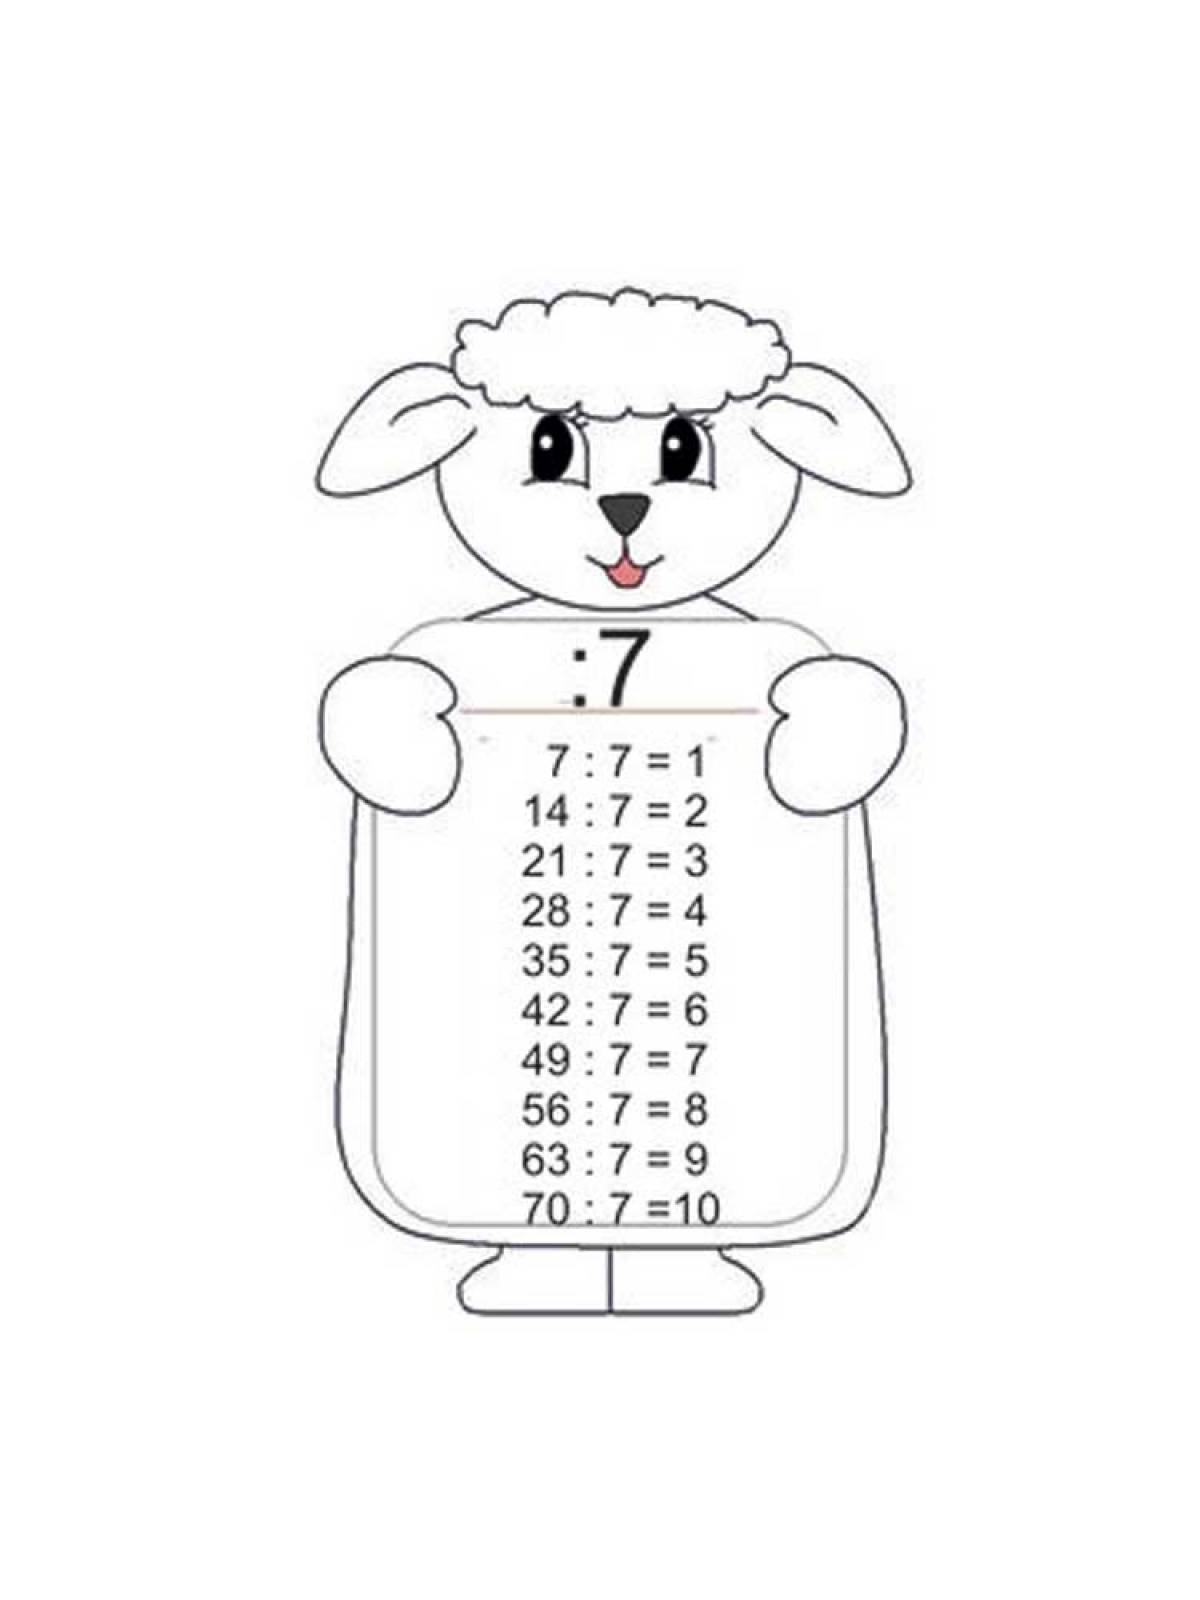 Multiplication table 3